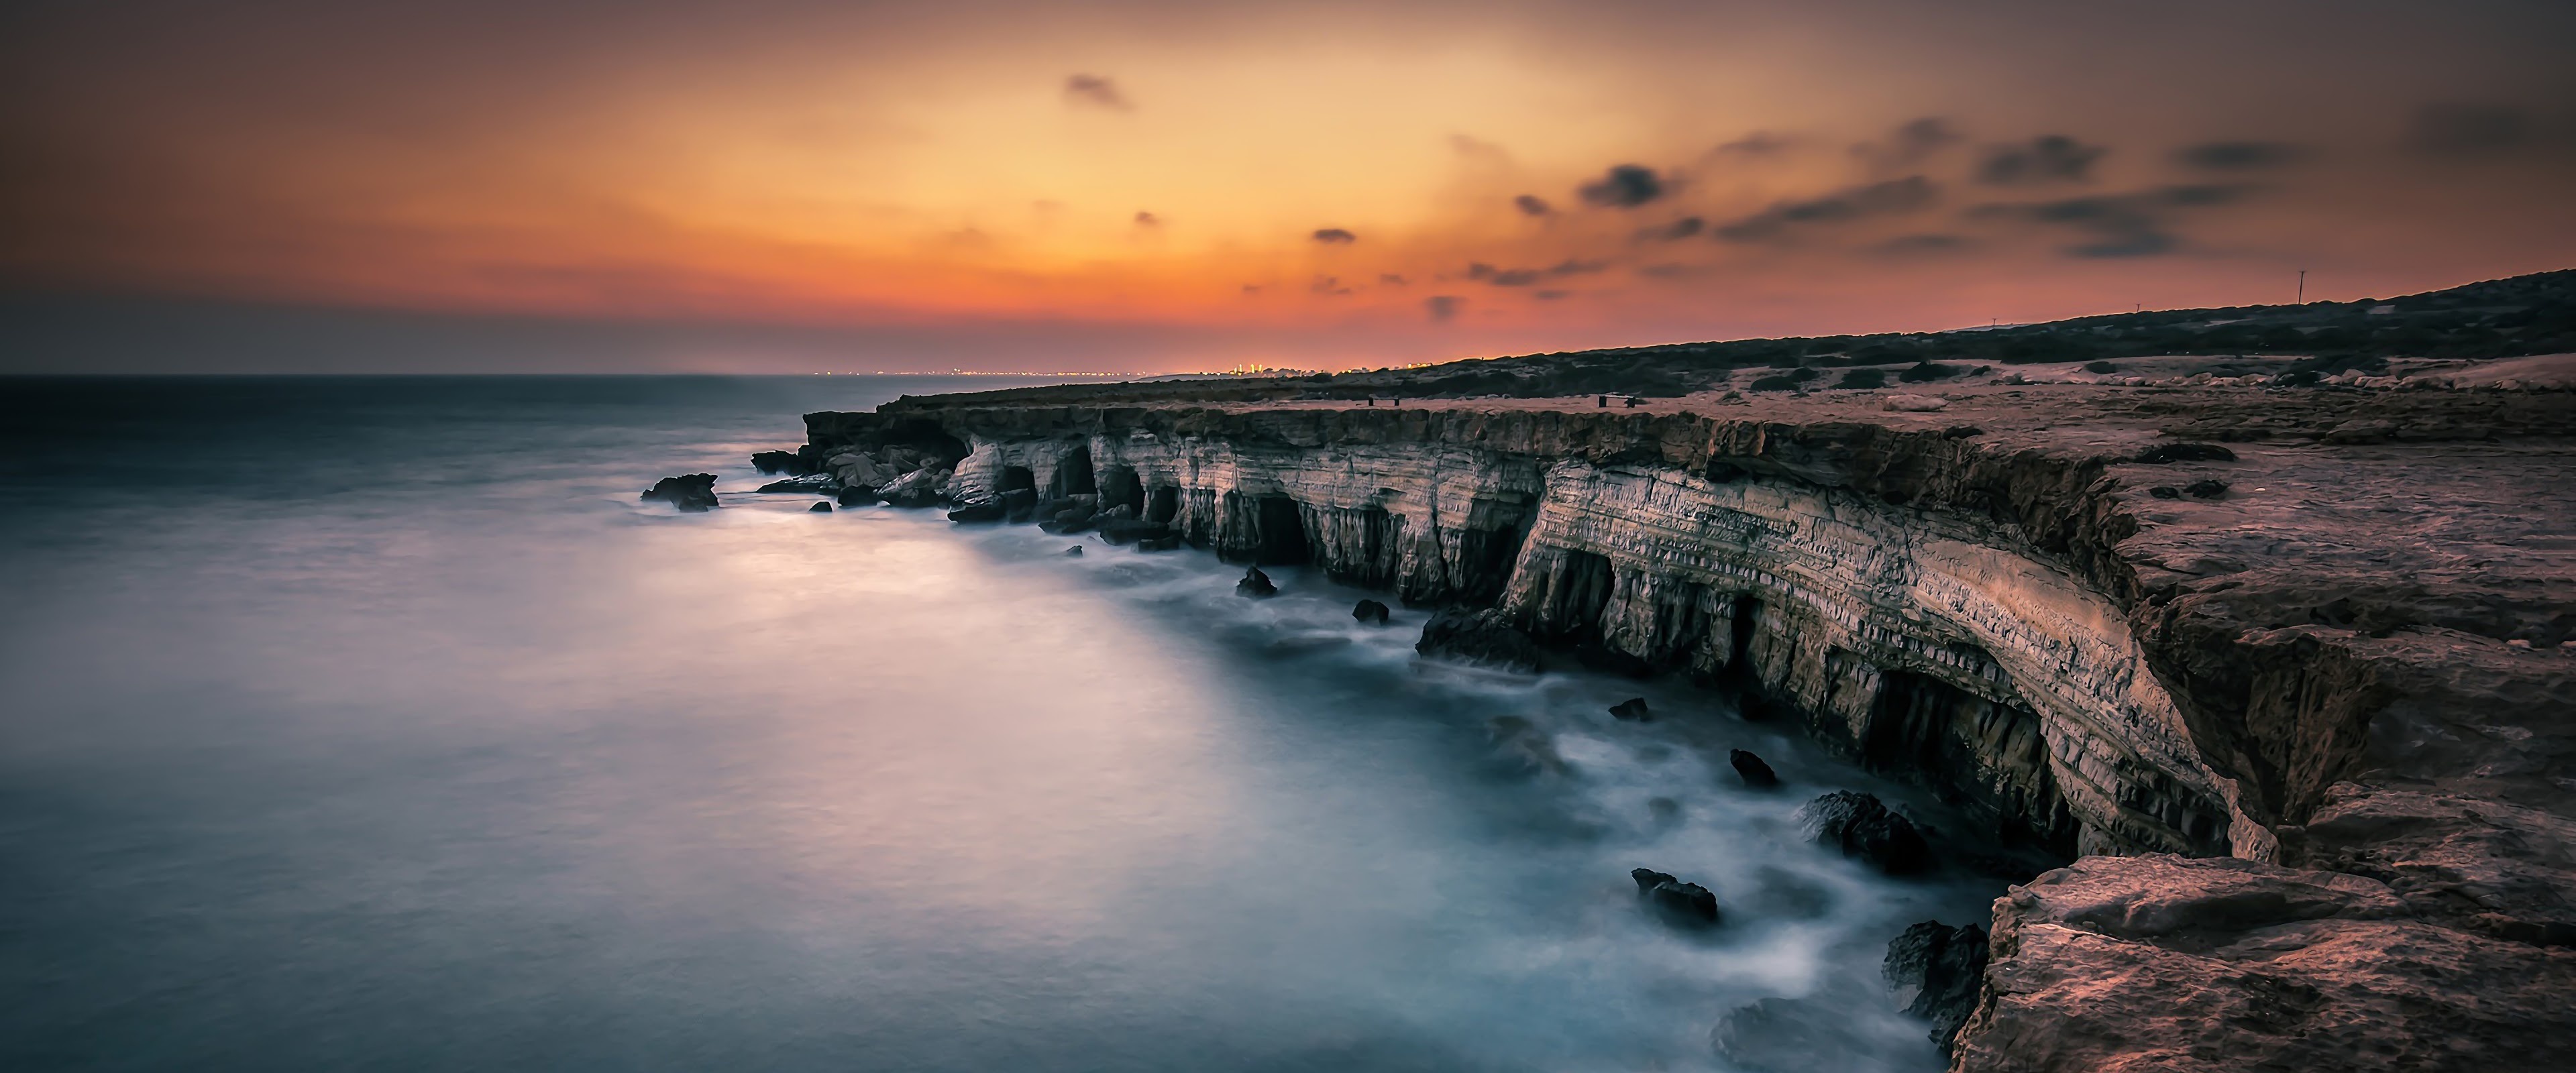 Cyprus Travels, Seascape sea sunset, Scenic beauty, Free download, 3840x1600 Dual Screen Desktop